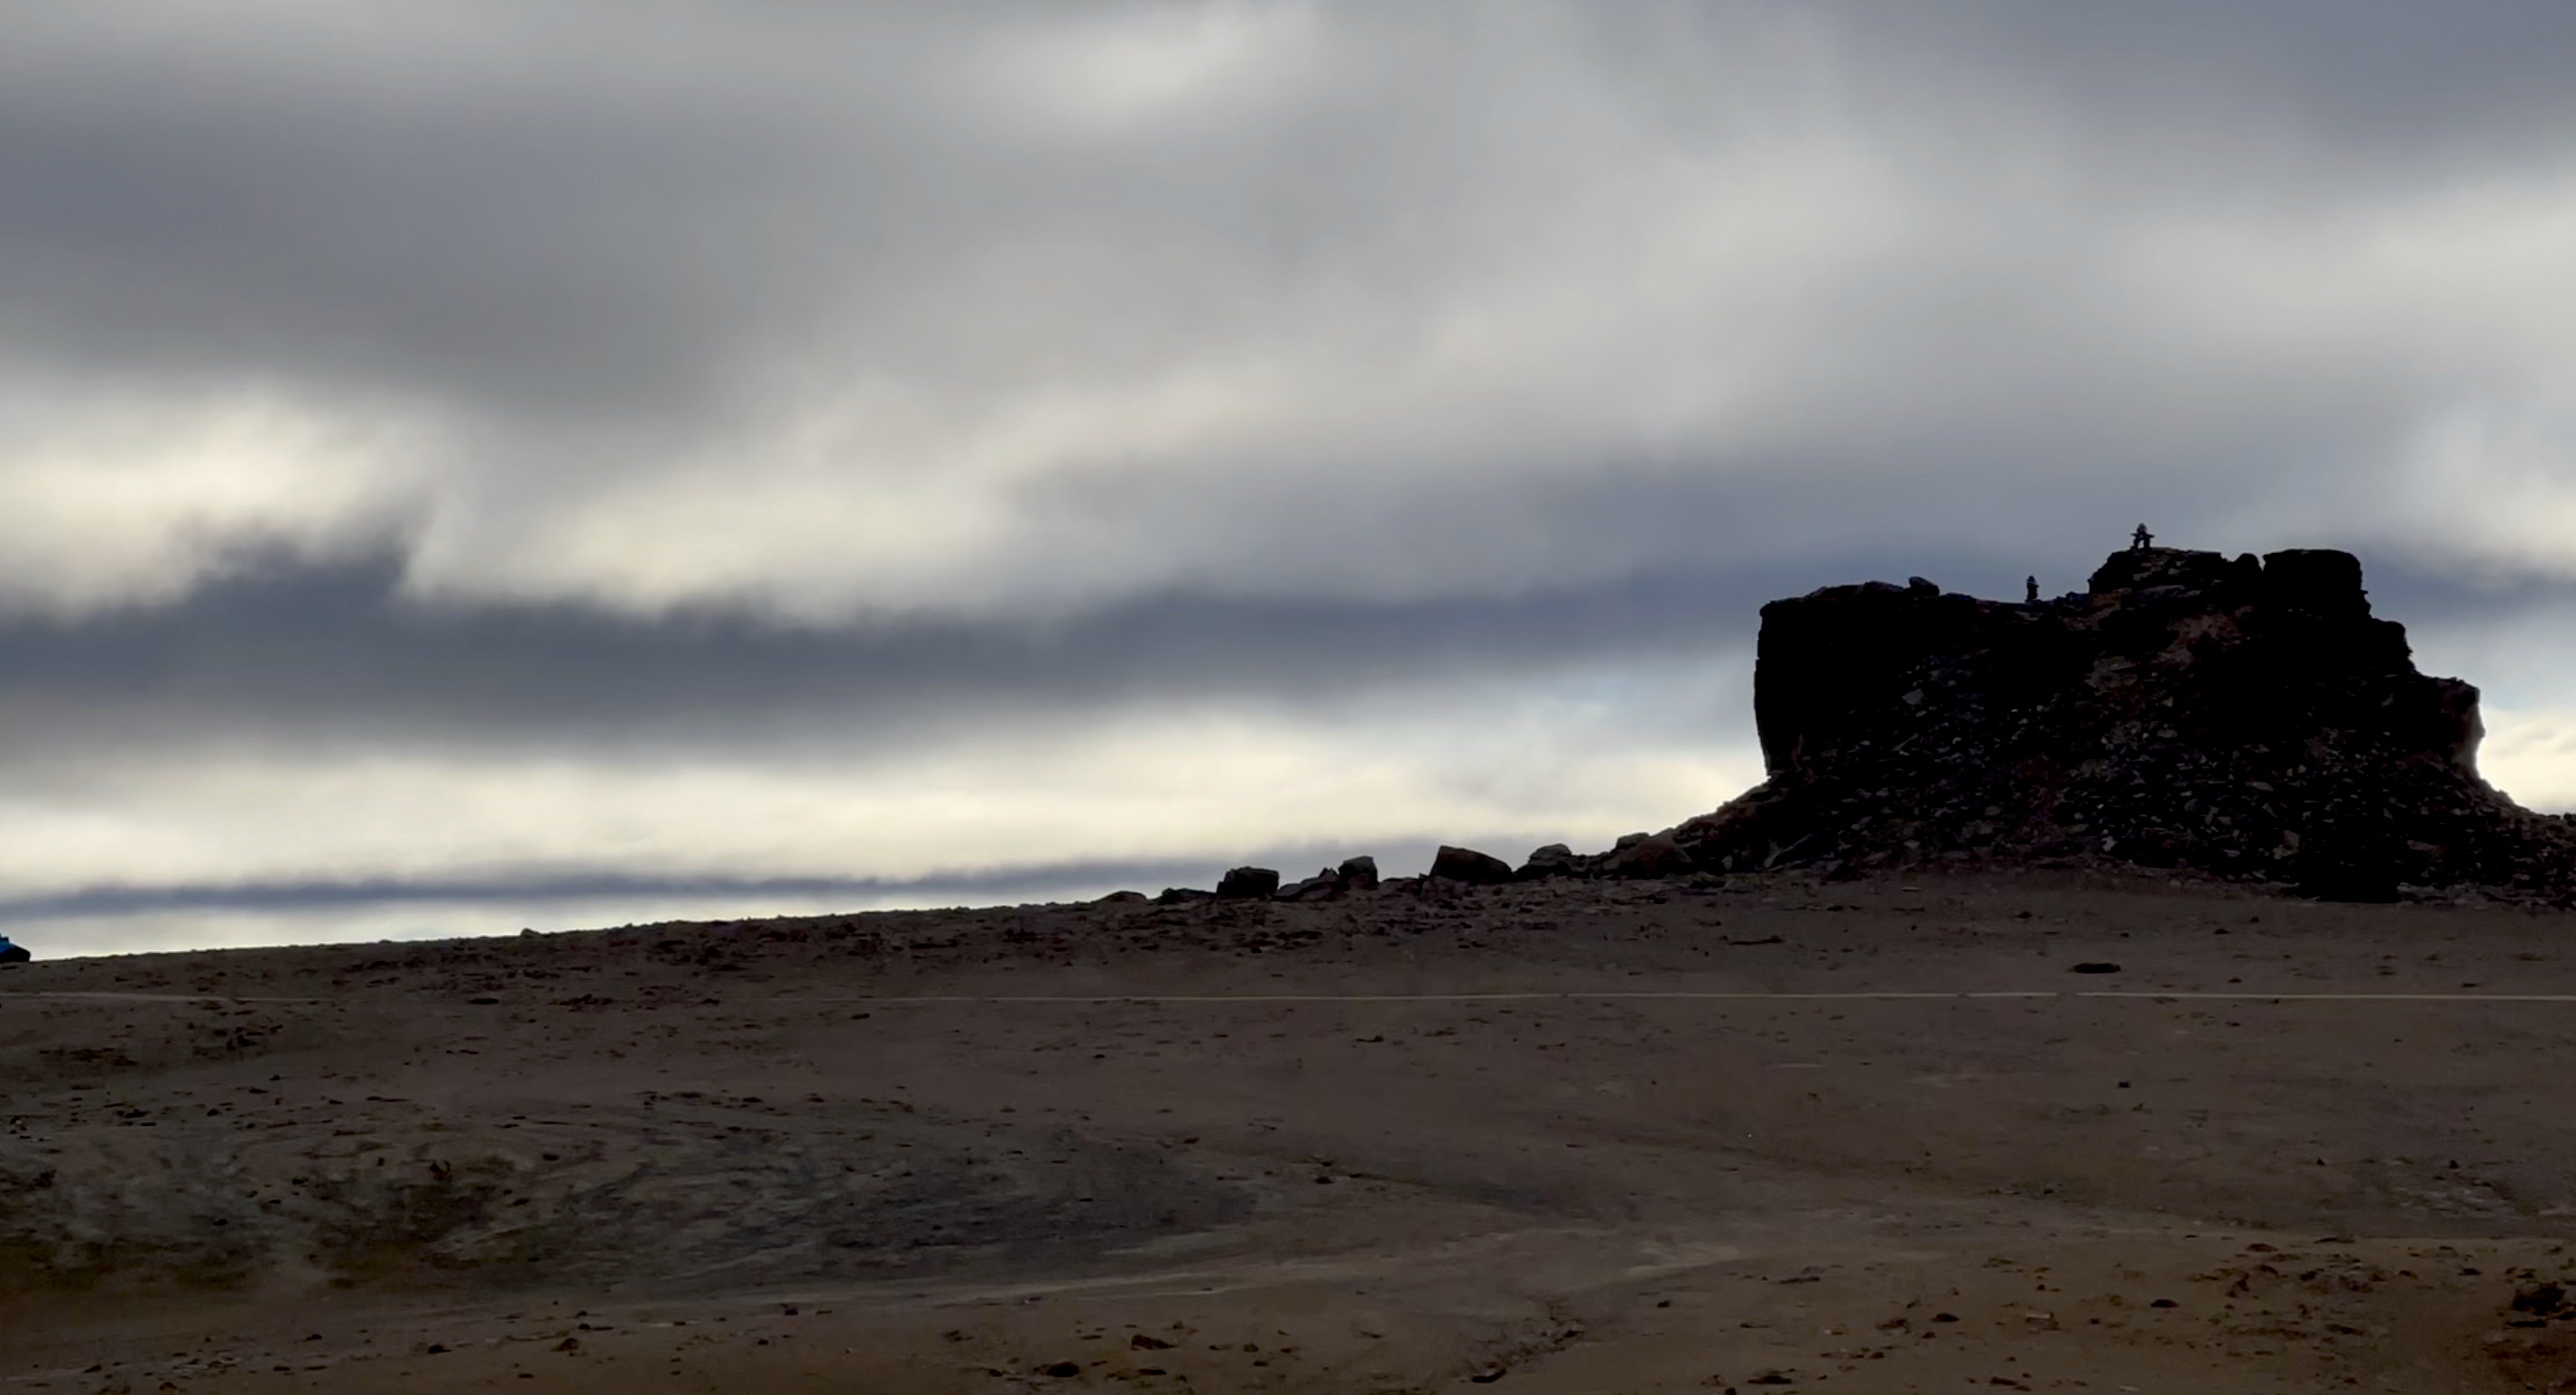 Ominous clouds roll in above a barren Arctic landscape.